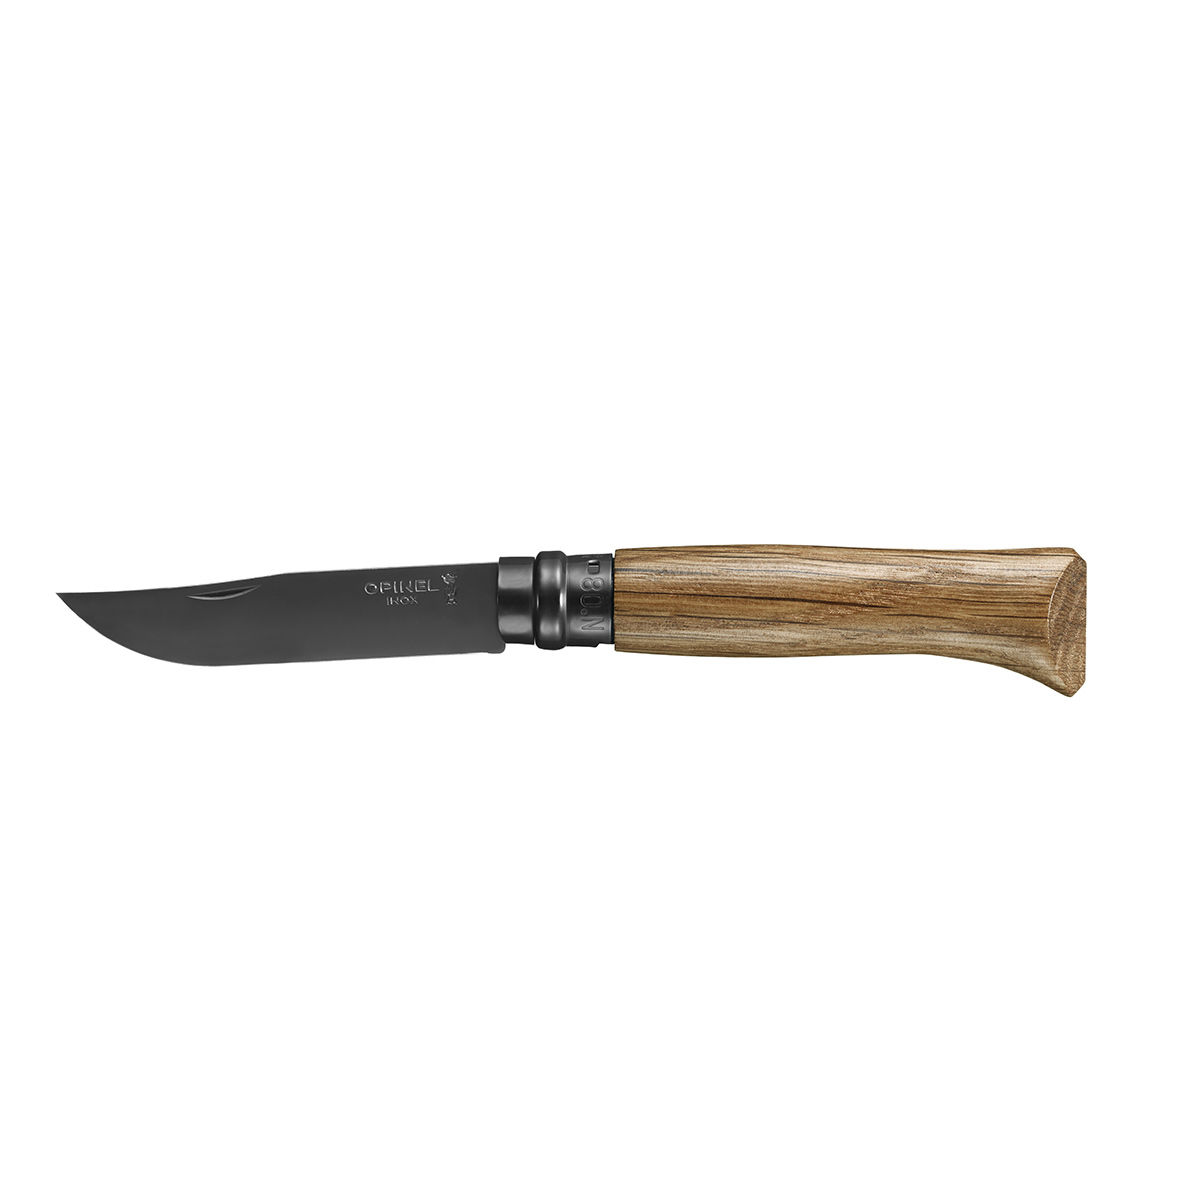 Opinel knife n°8 - Tradition 8,5 cm - Black stainless steel, oak